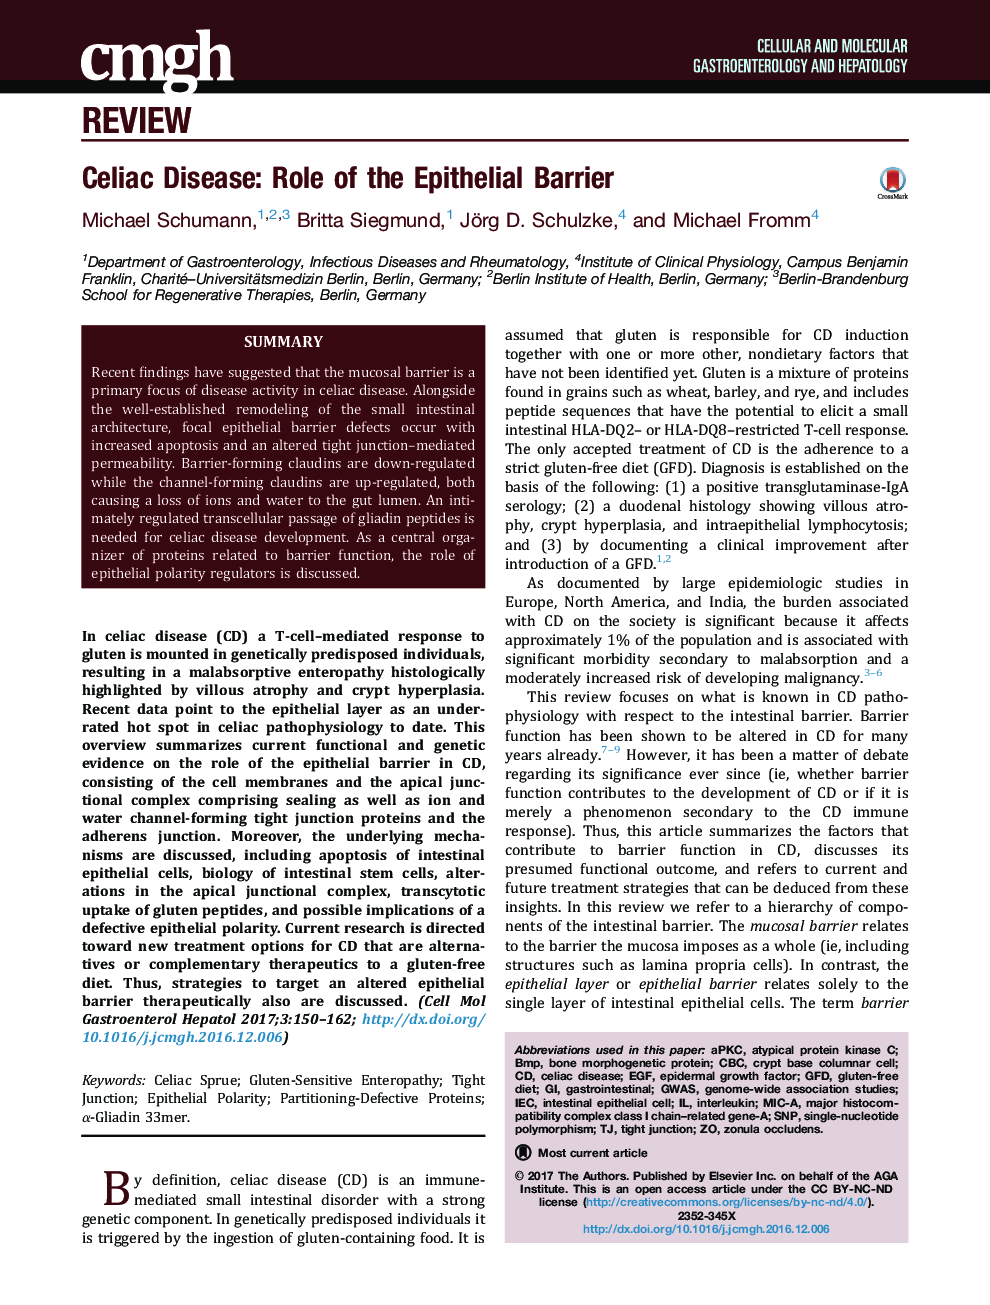 Celiac Disease: Role of the Epithelial Barrier